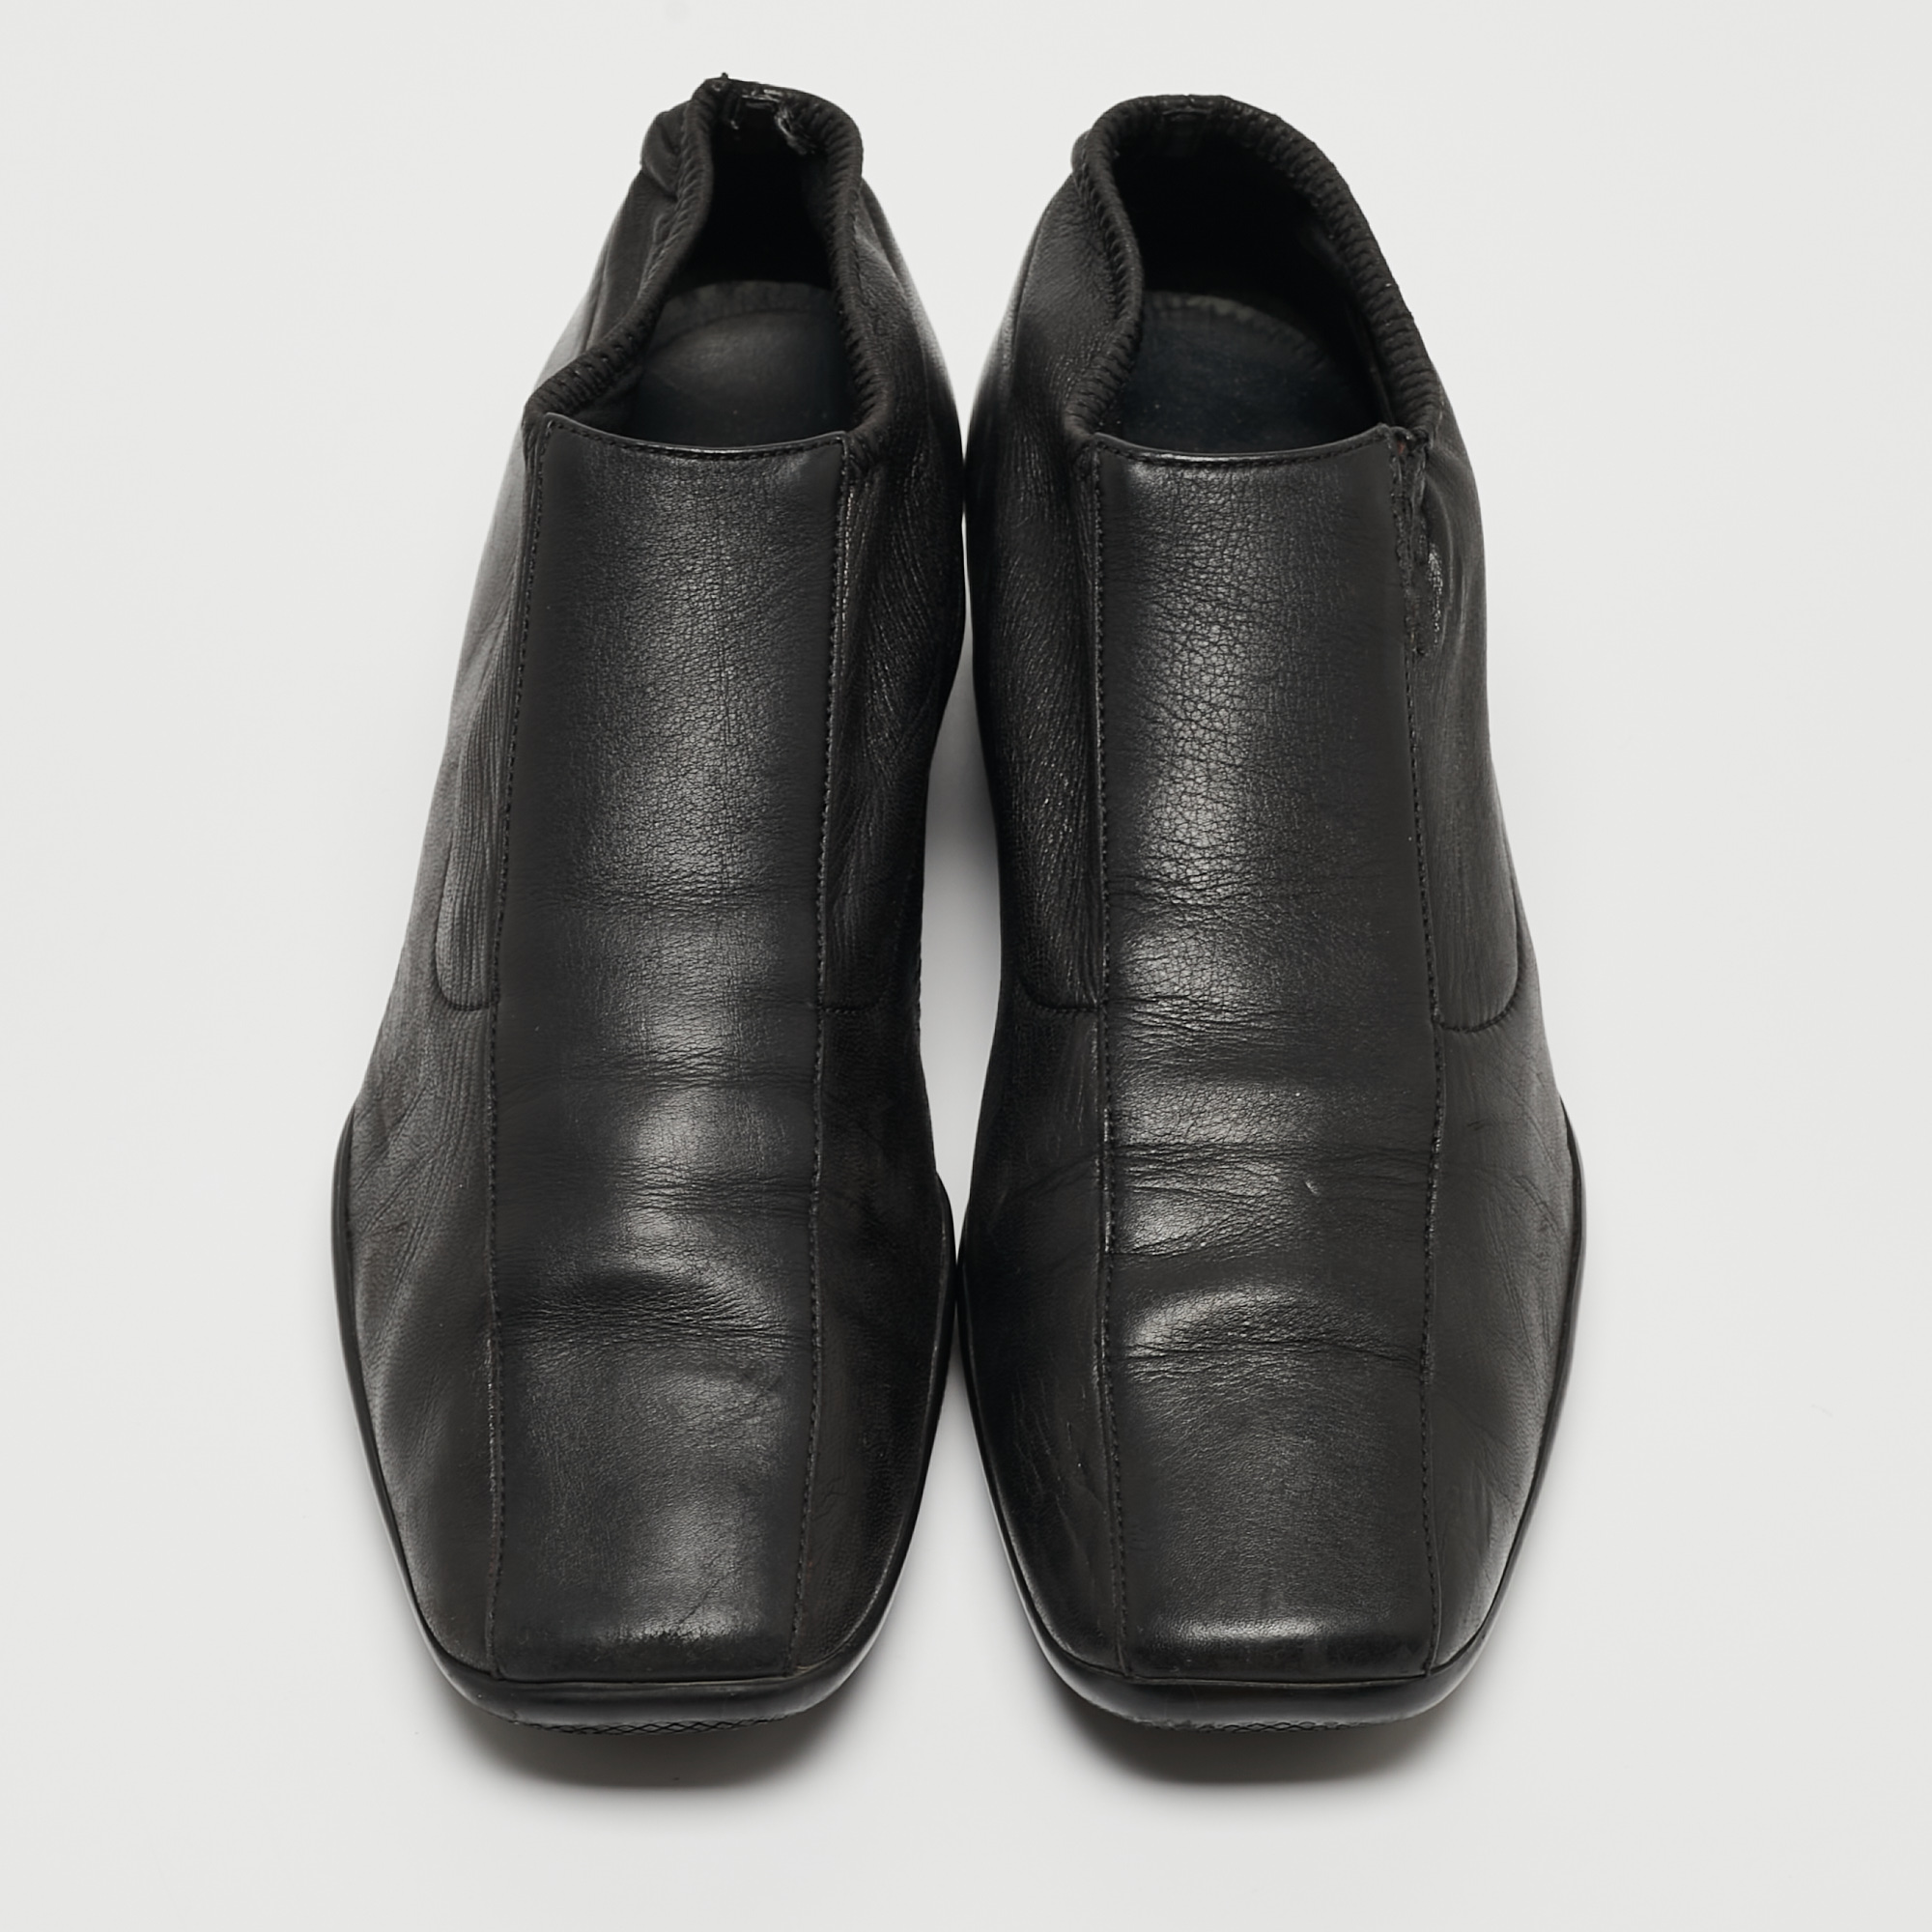 Prada Sport Black Leather Slip On Loafers Size 38